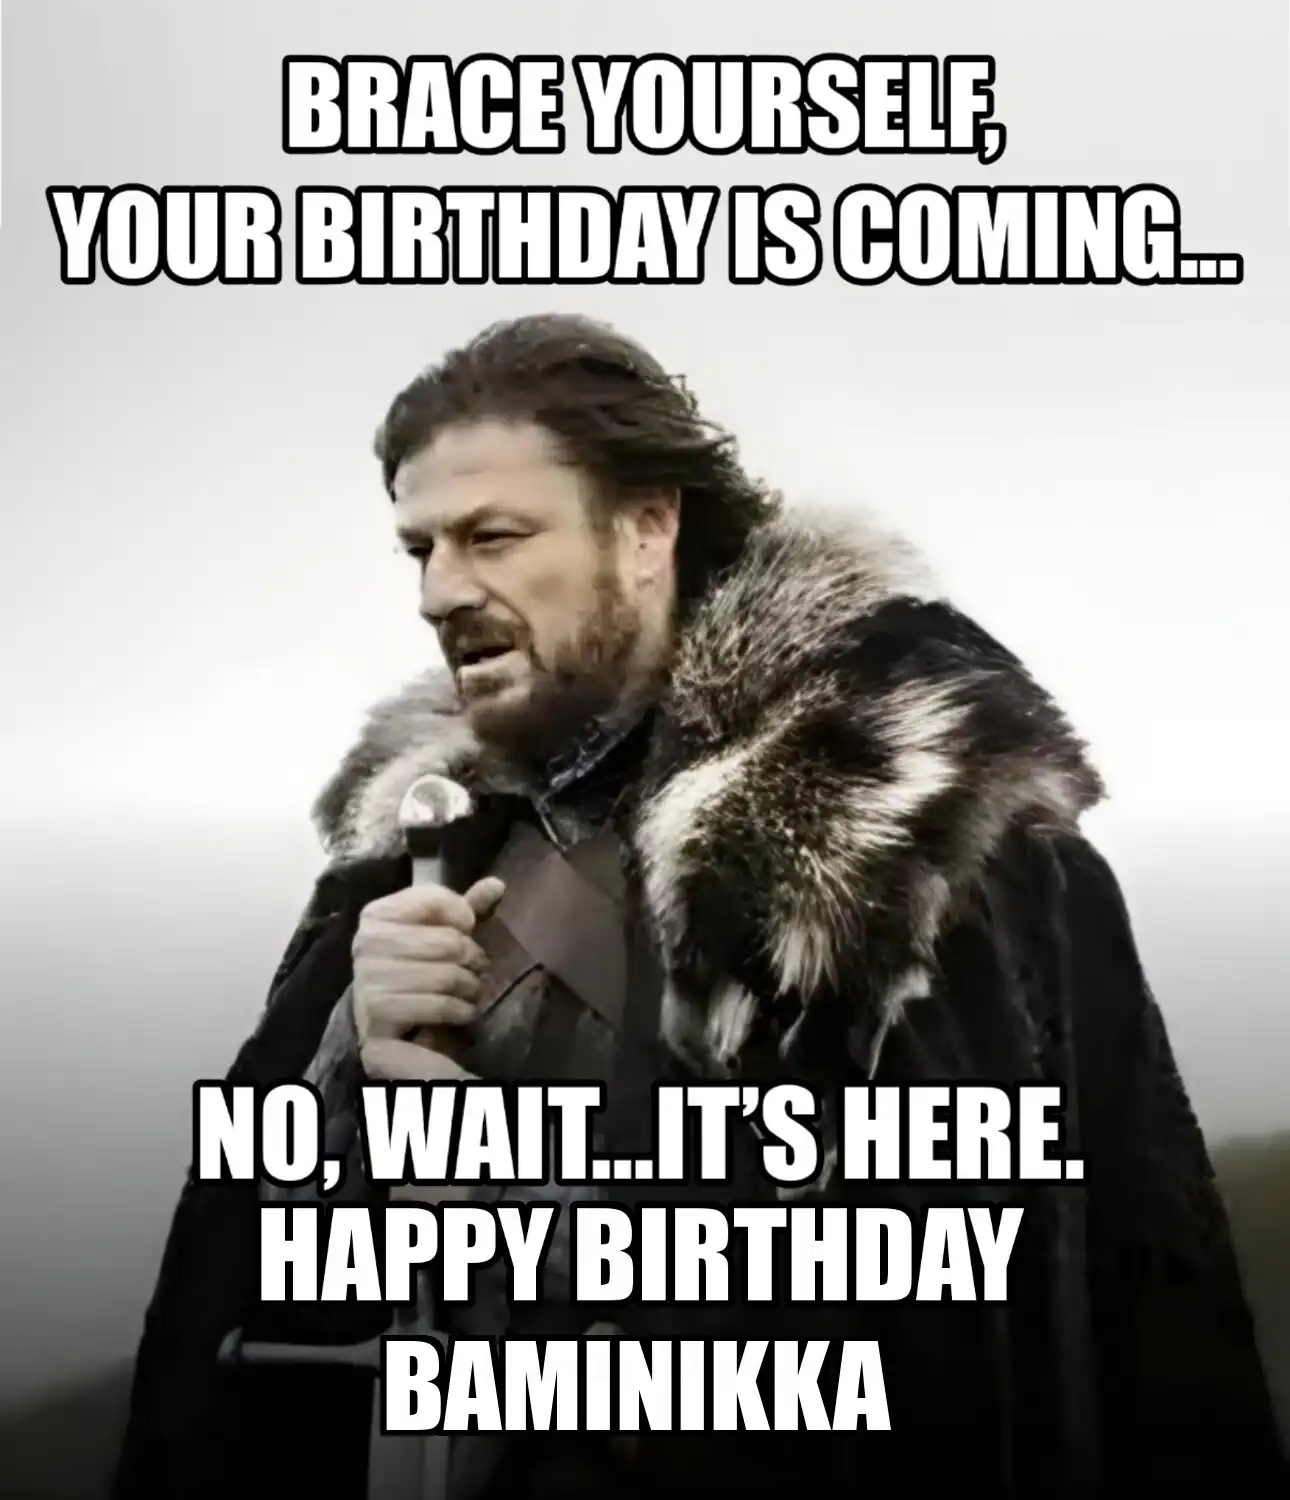 Happy Birthday Baminikka Brace Yourself Your Birthday Is Coming Meme